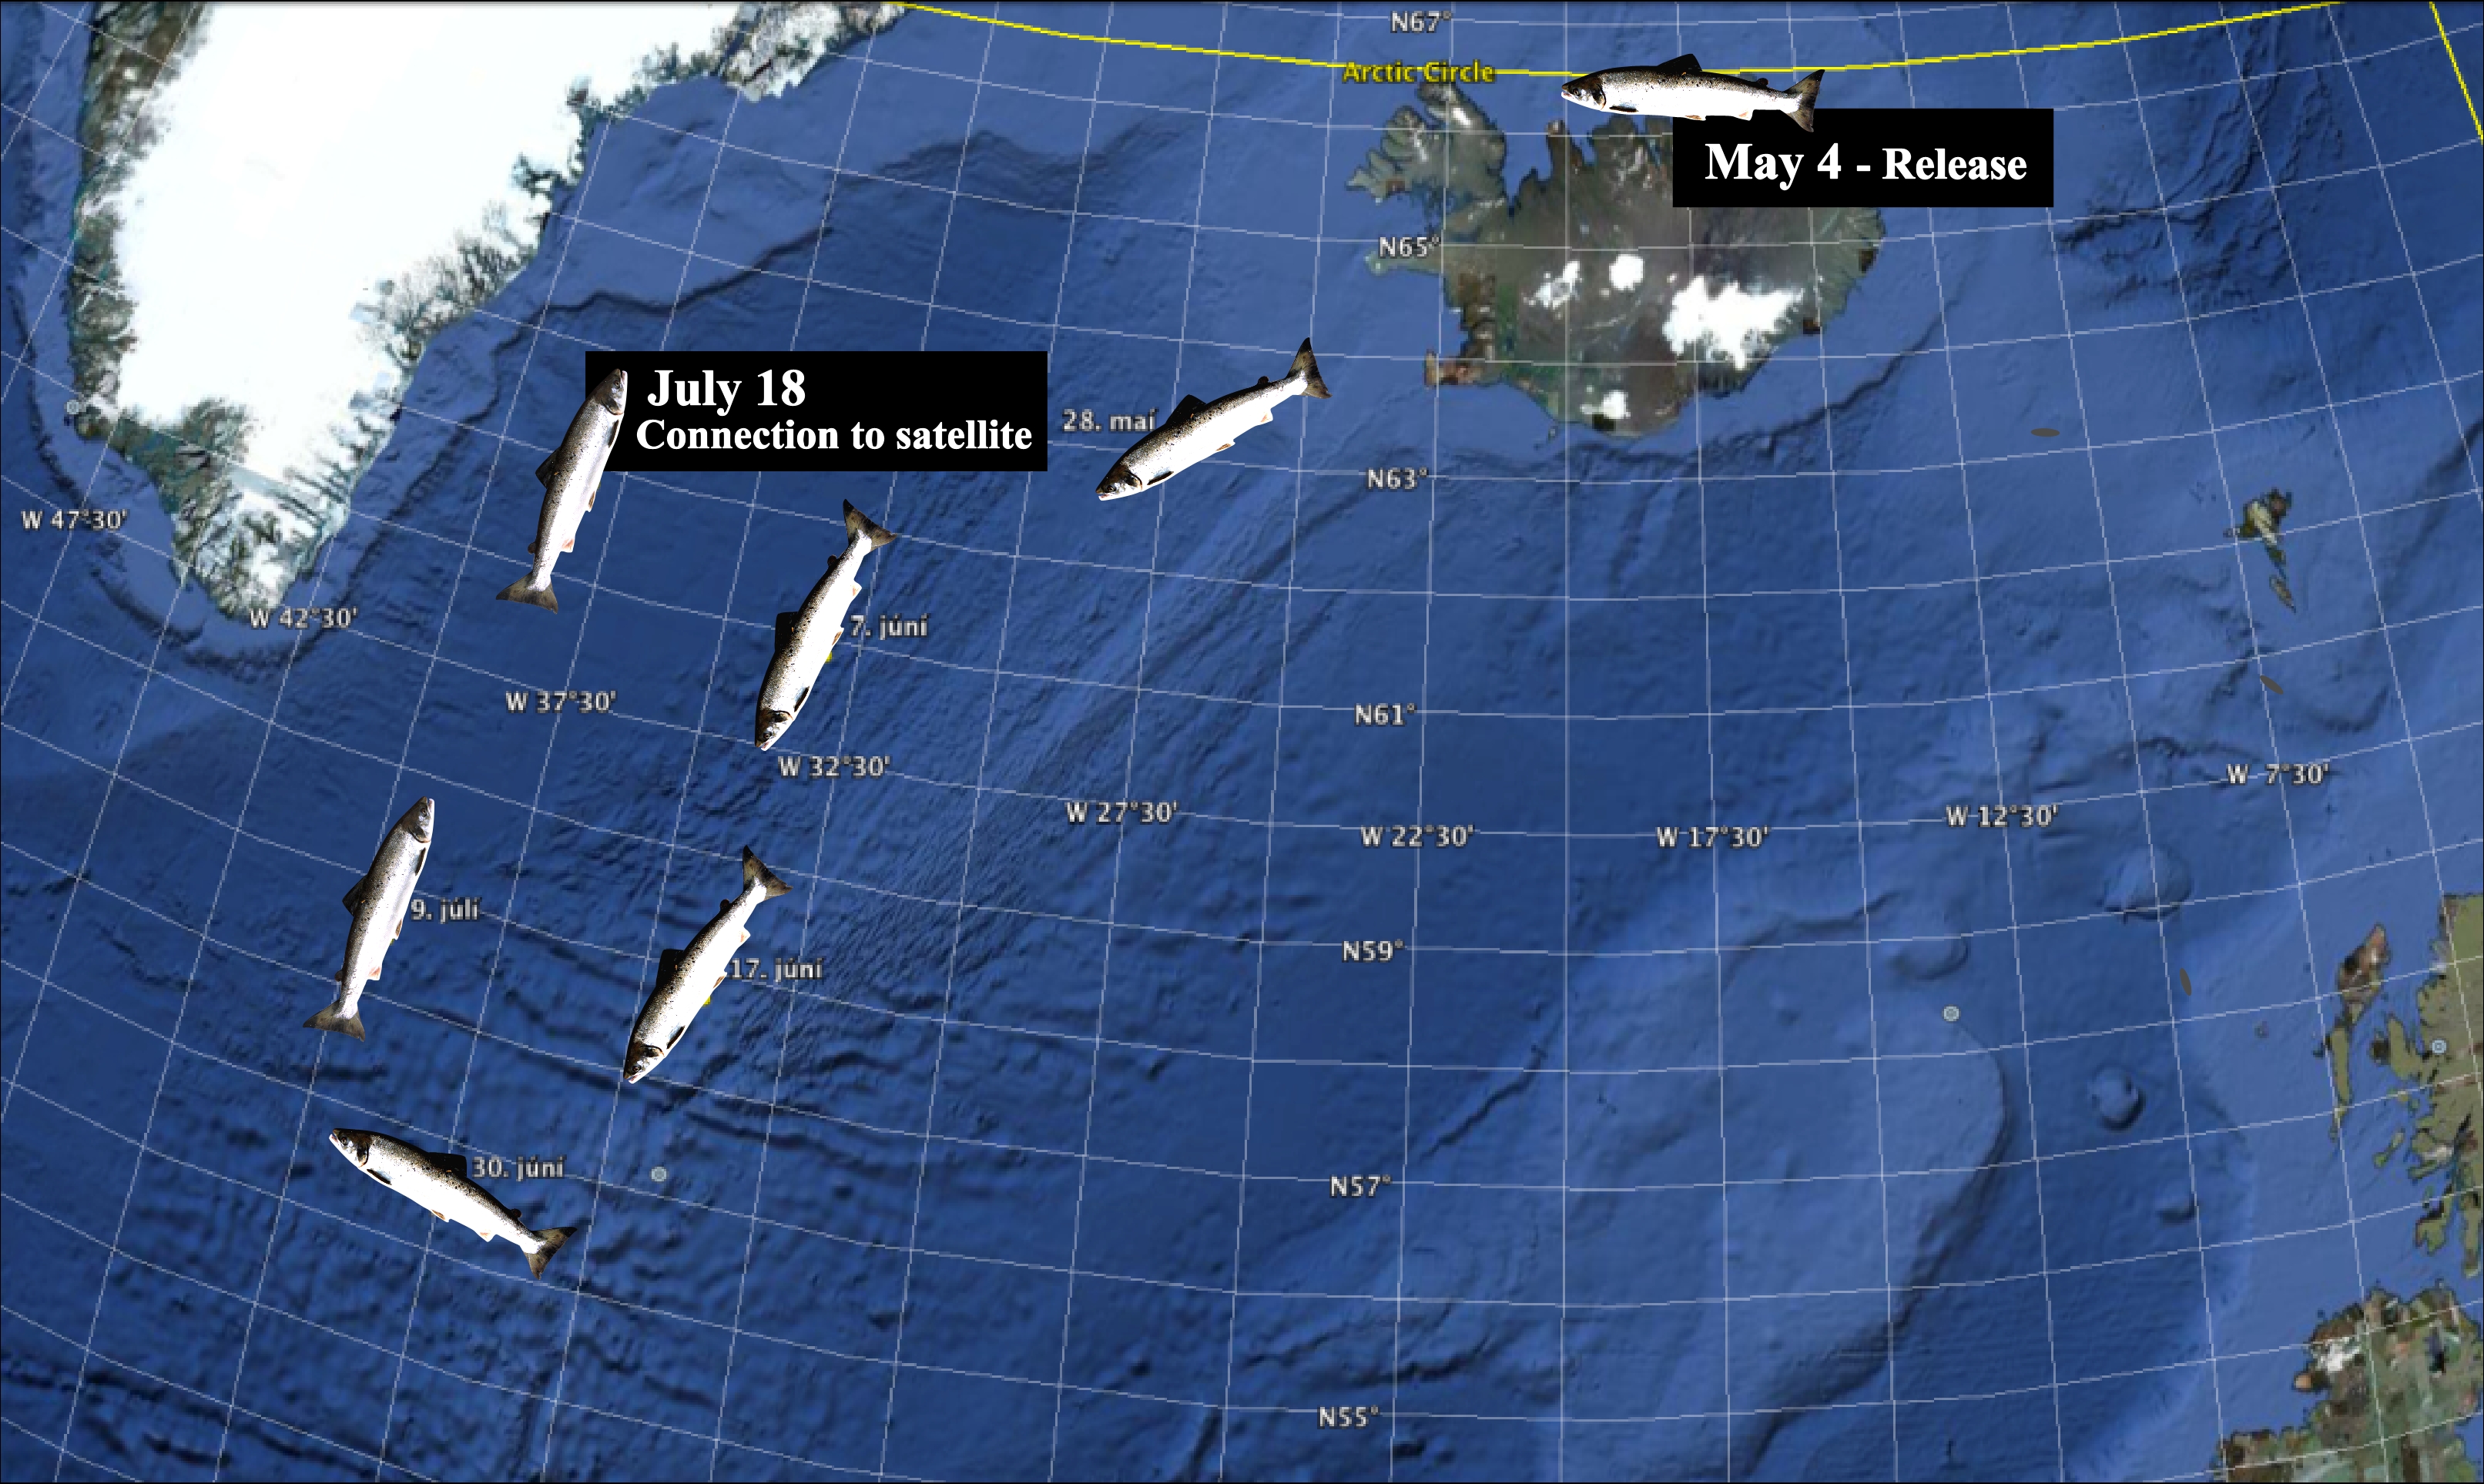 atlantic_salmon_from_laxa_iceland-migration_route_from_po-up_satellite_ tag_data-laxfiskar-johannes_sturlaugsson